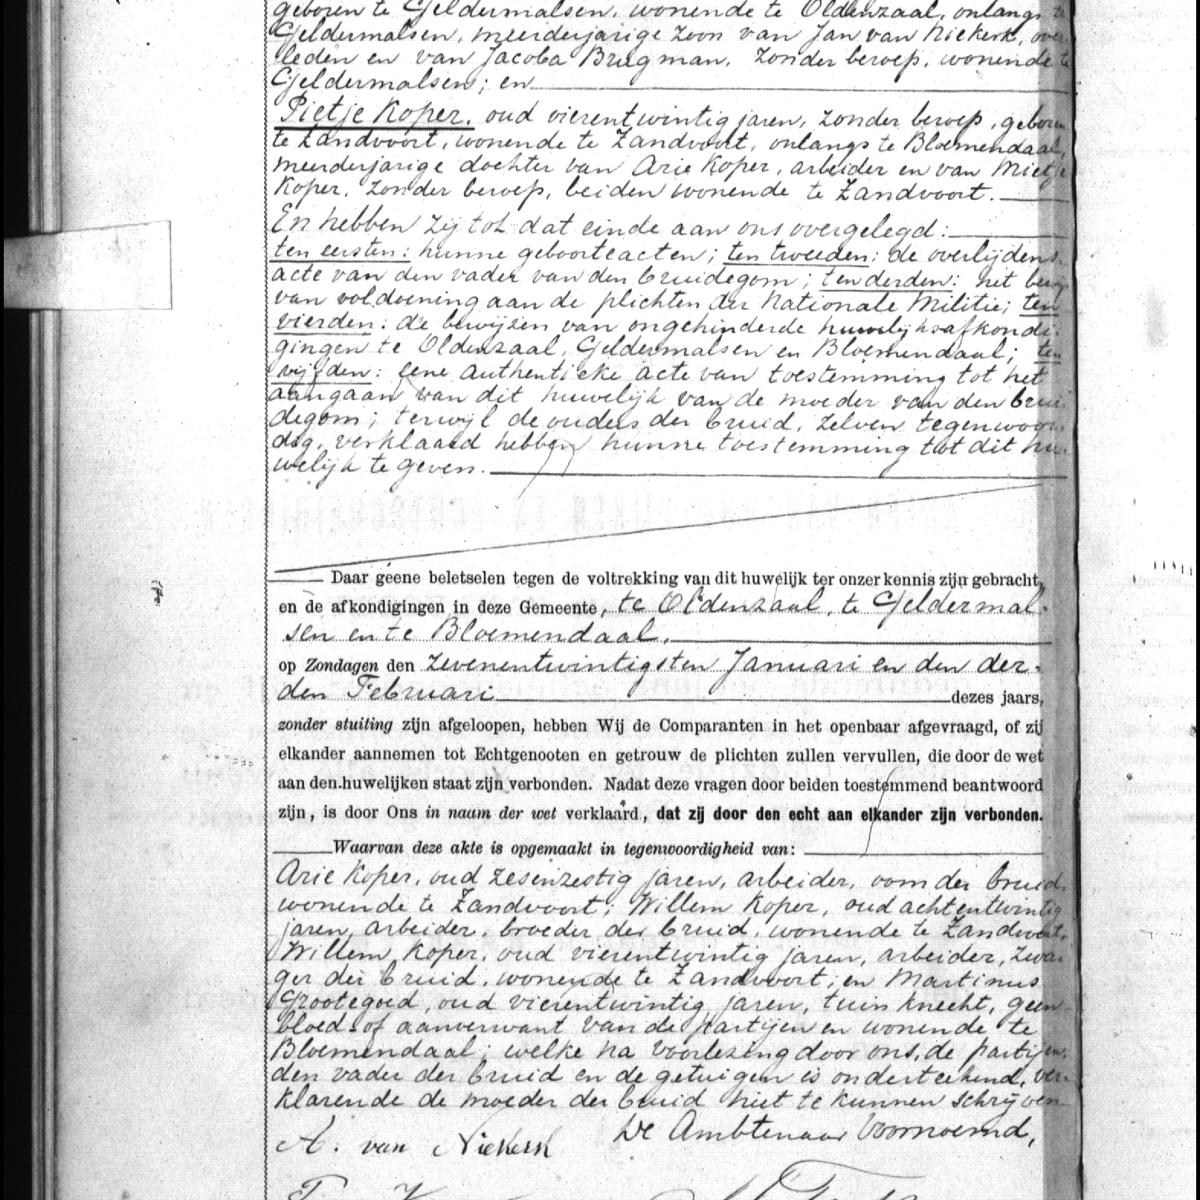 Civil registry of marriages, Zandvoort, 1895, record 1